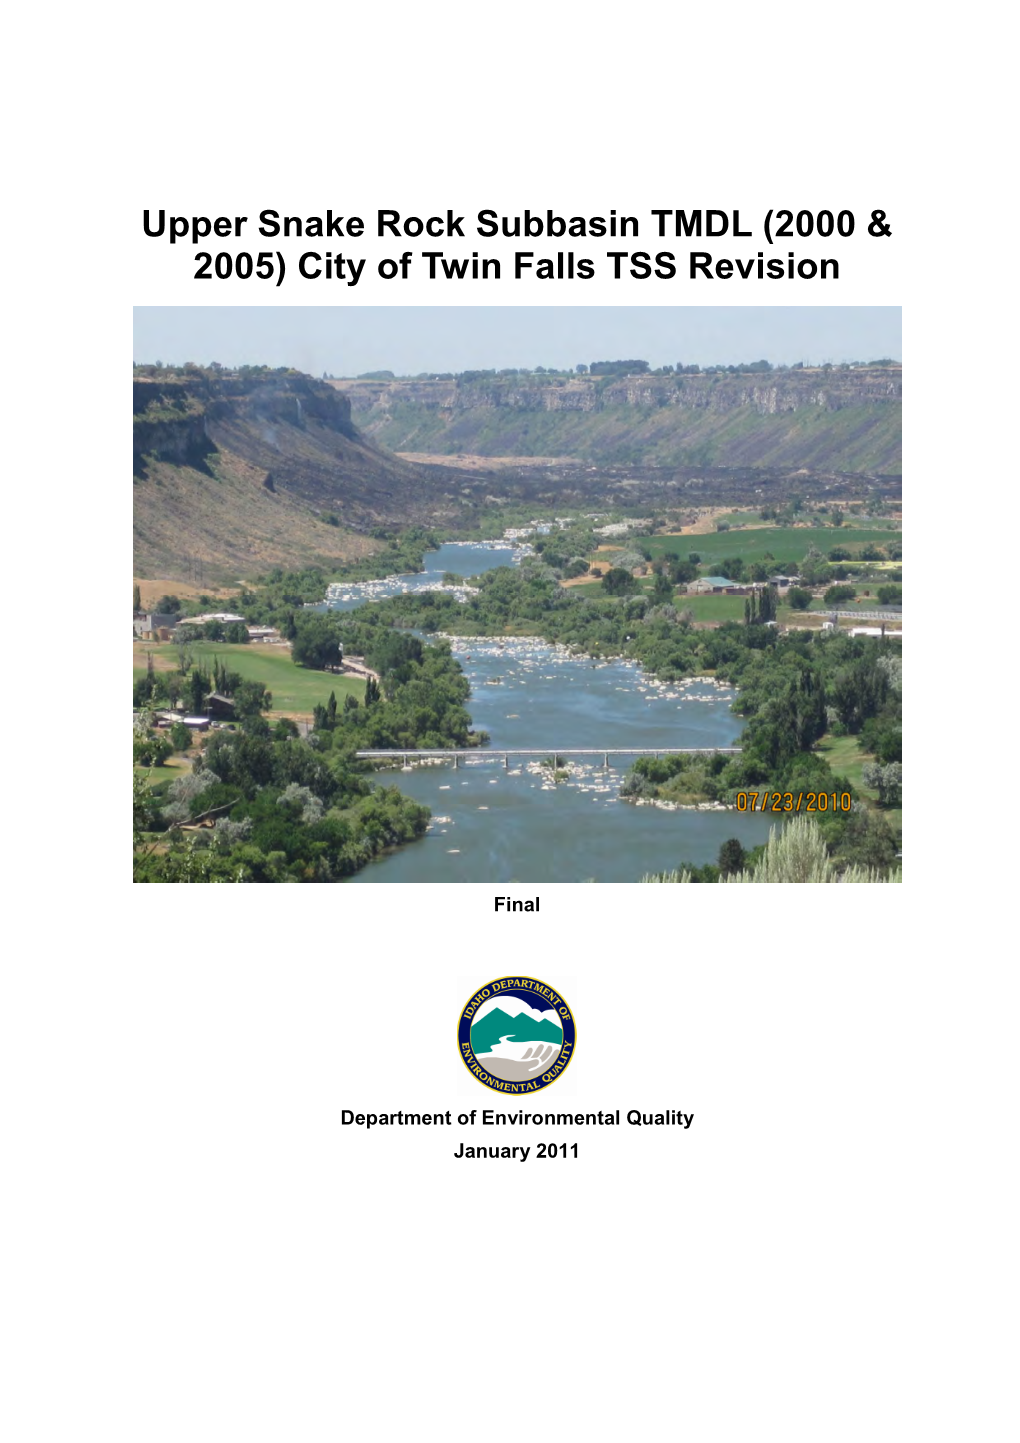 Upper Snake Rock Subbasin TMDL (2000 & 2005) City of Twin Falls TSS Revision